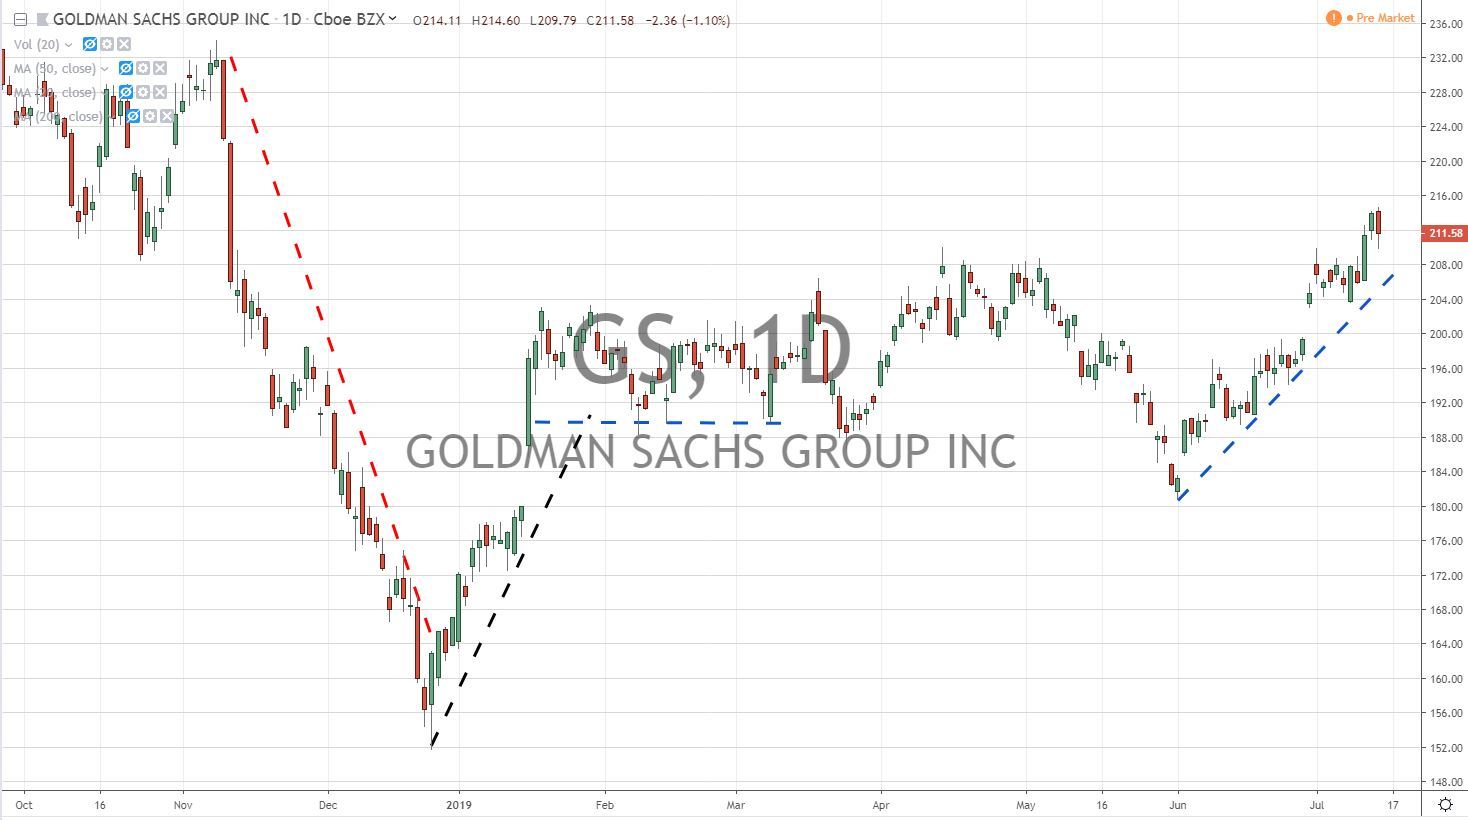 Goldman Sachs and JP Morgan Earnings Reports 7-16-19